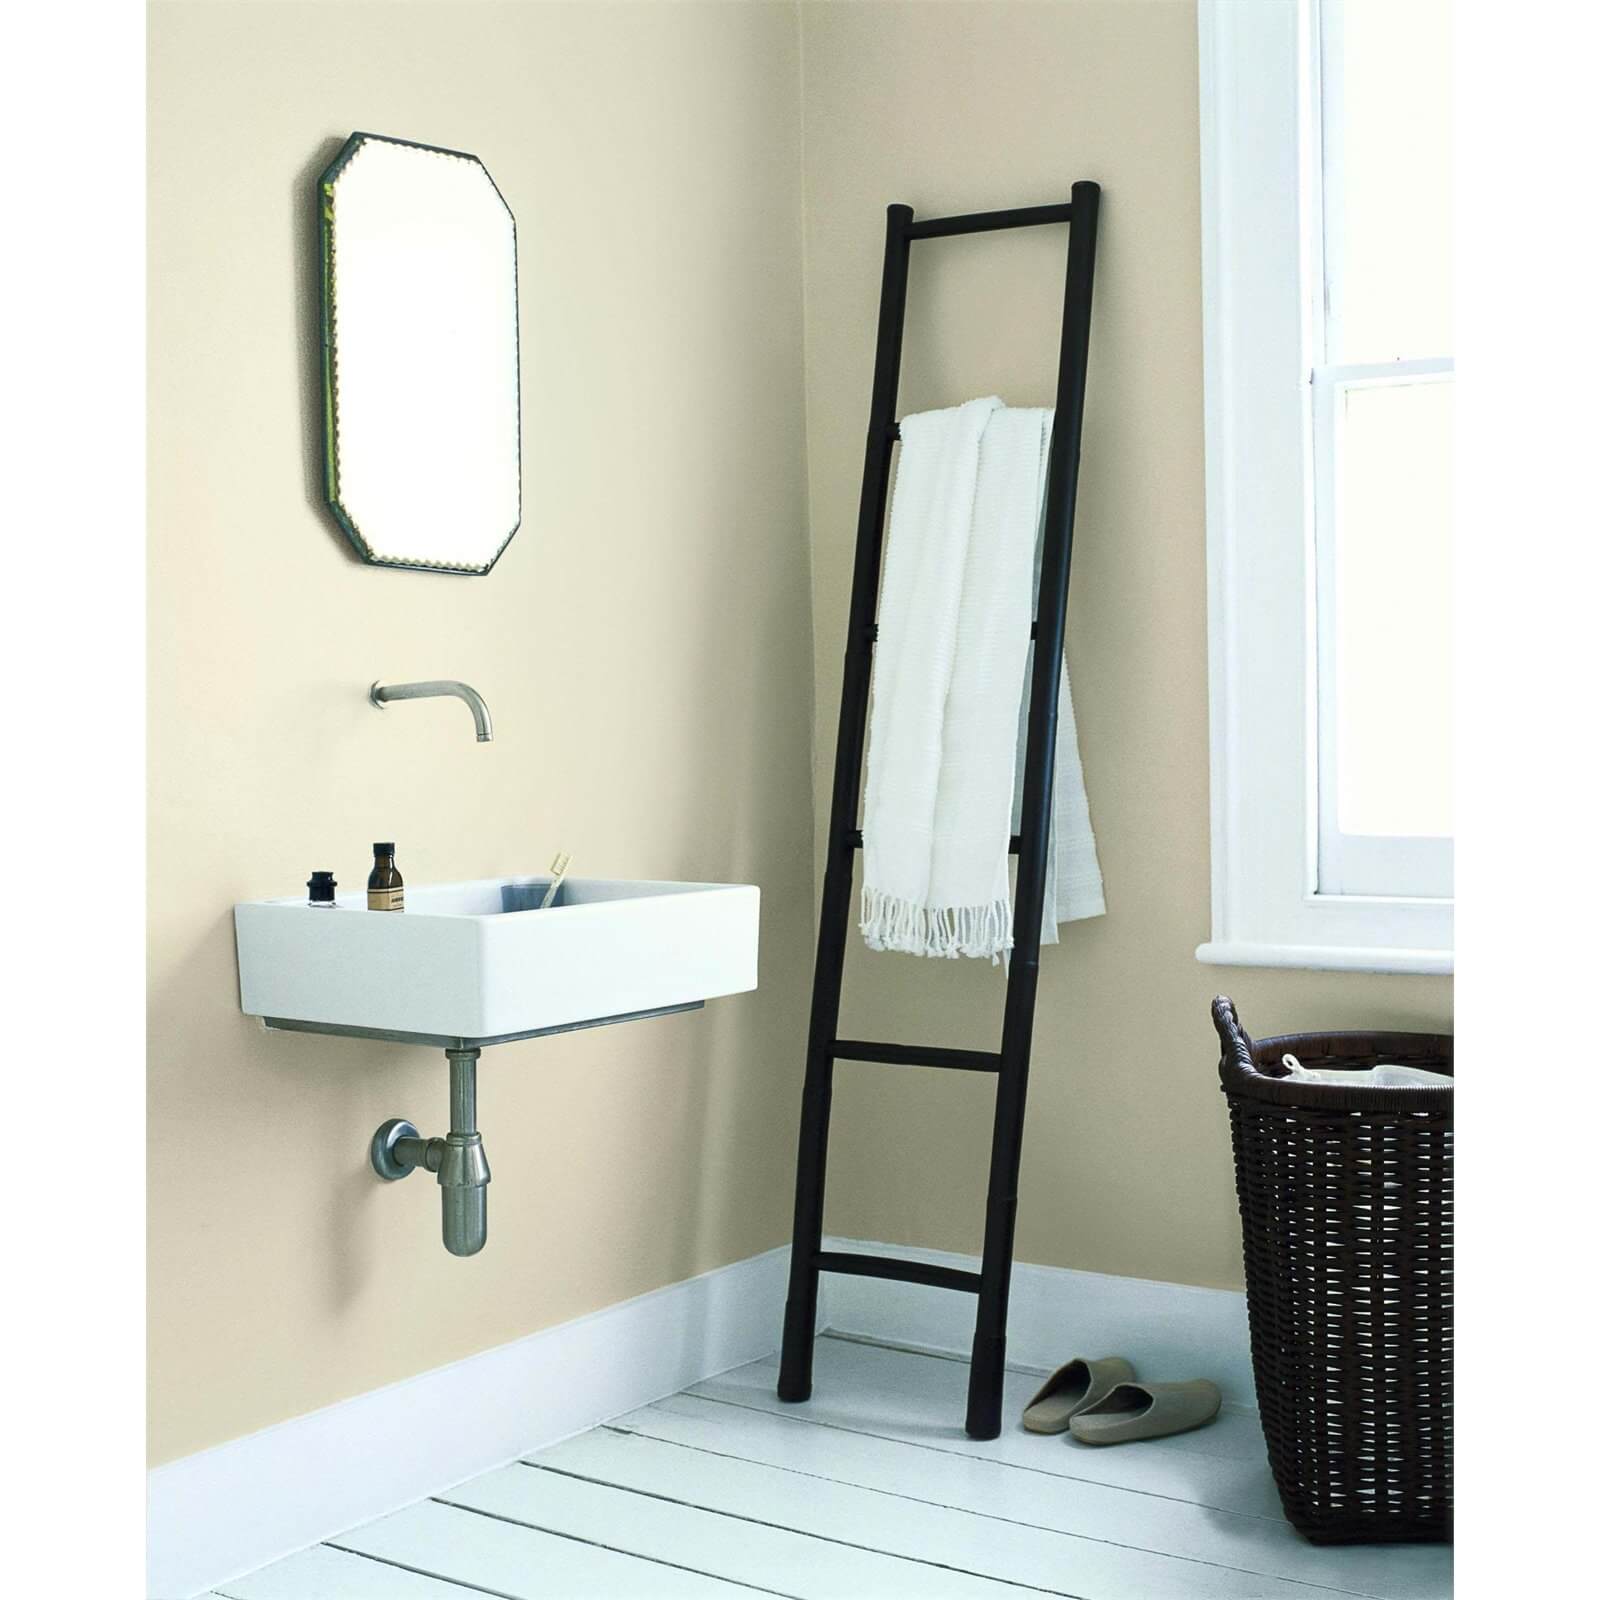 Dulux Easycare Bathroom Soft Sheen Emulsion Paint Natural Hessian - 2.5L